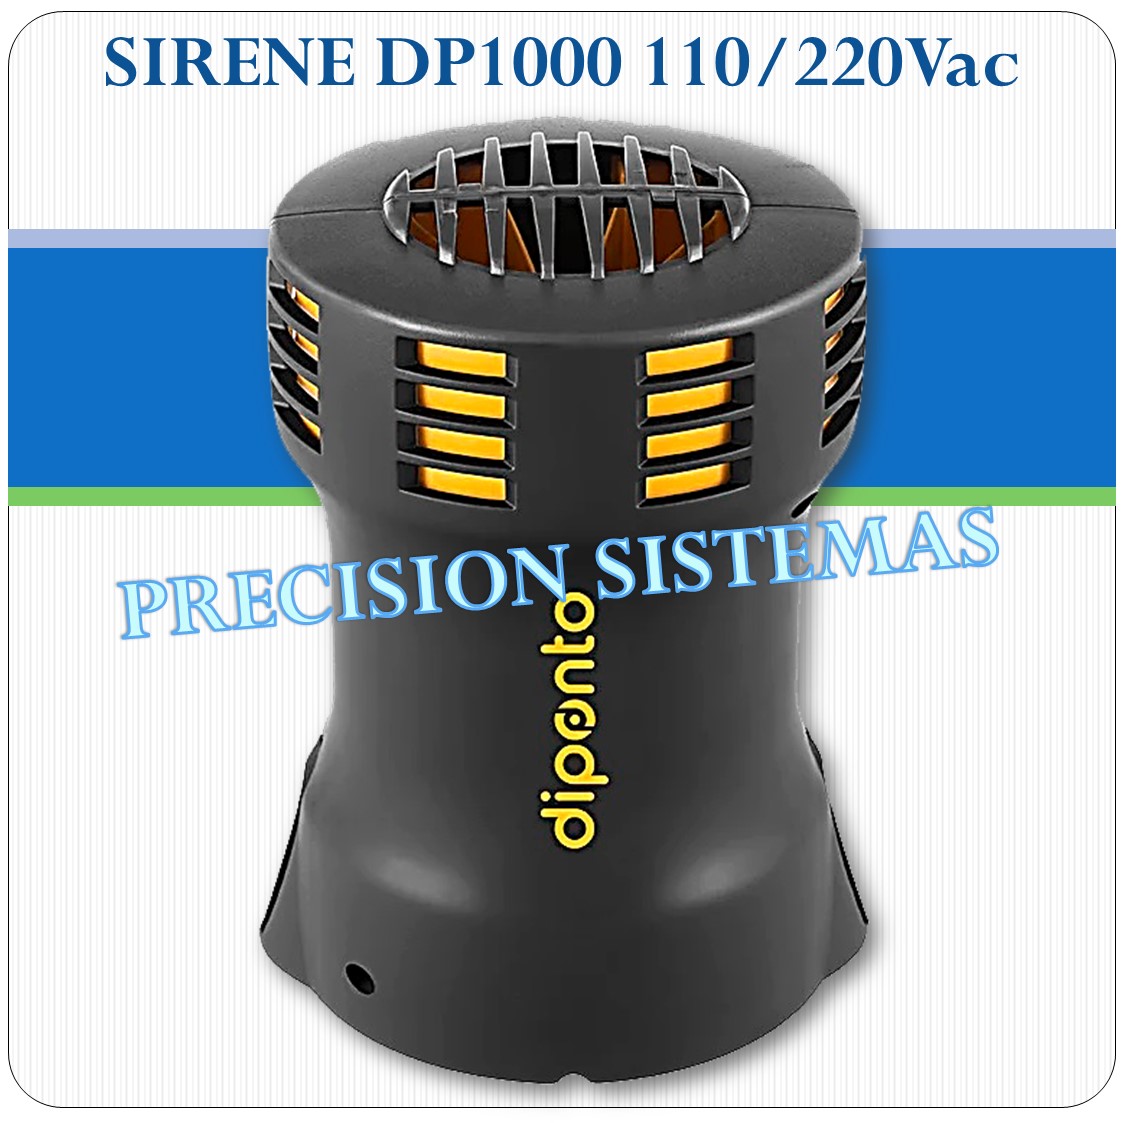 Sirene Eletromecânica DP1000 - 1000 metros - 110/220Vac